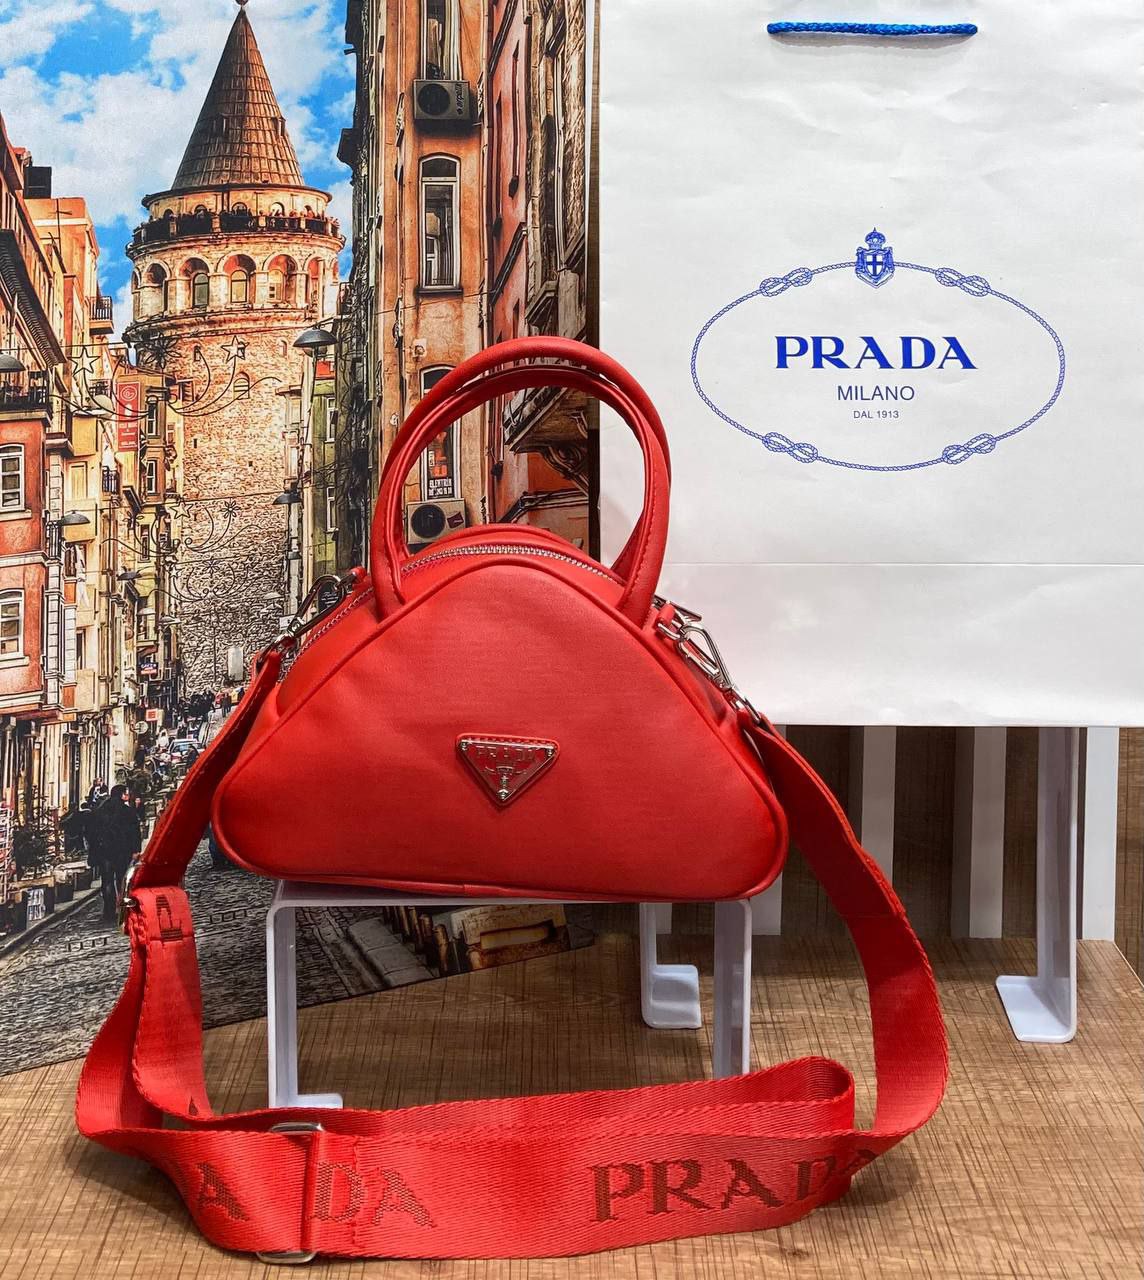 Prada Milano Handbag